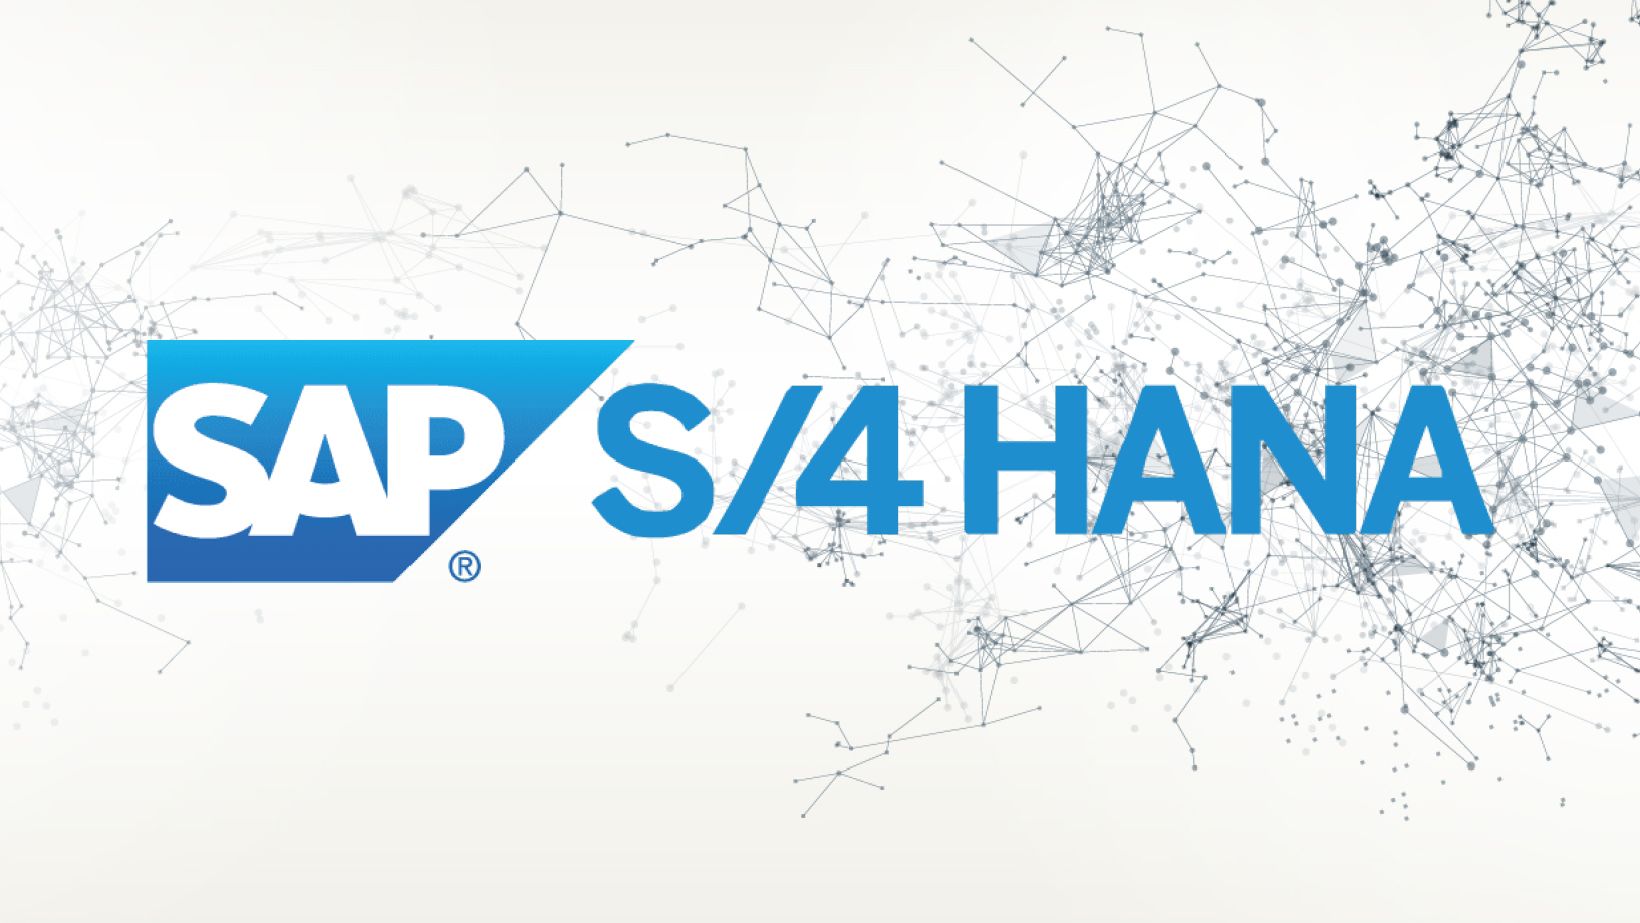 Das Logo von SAP S/4 HANA.